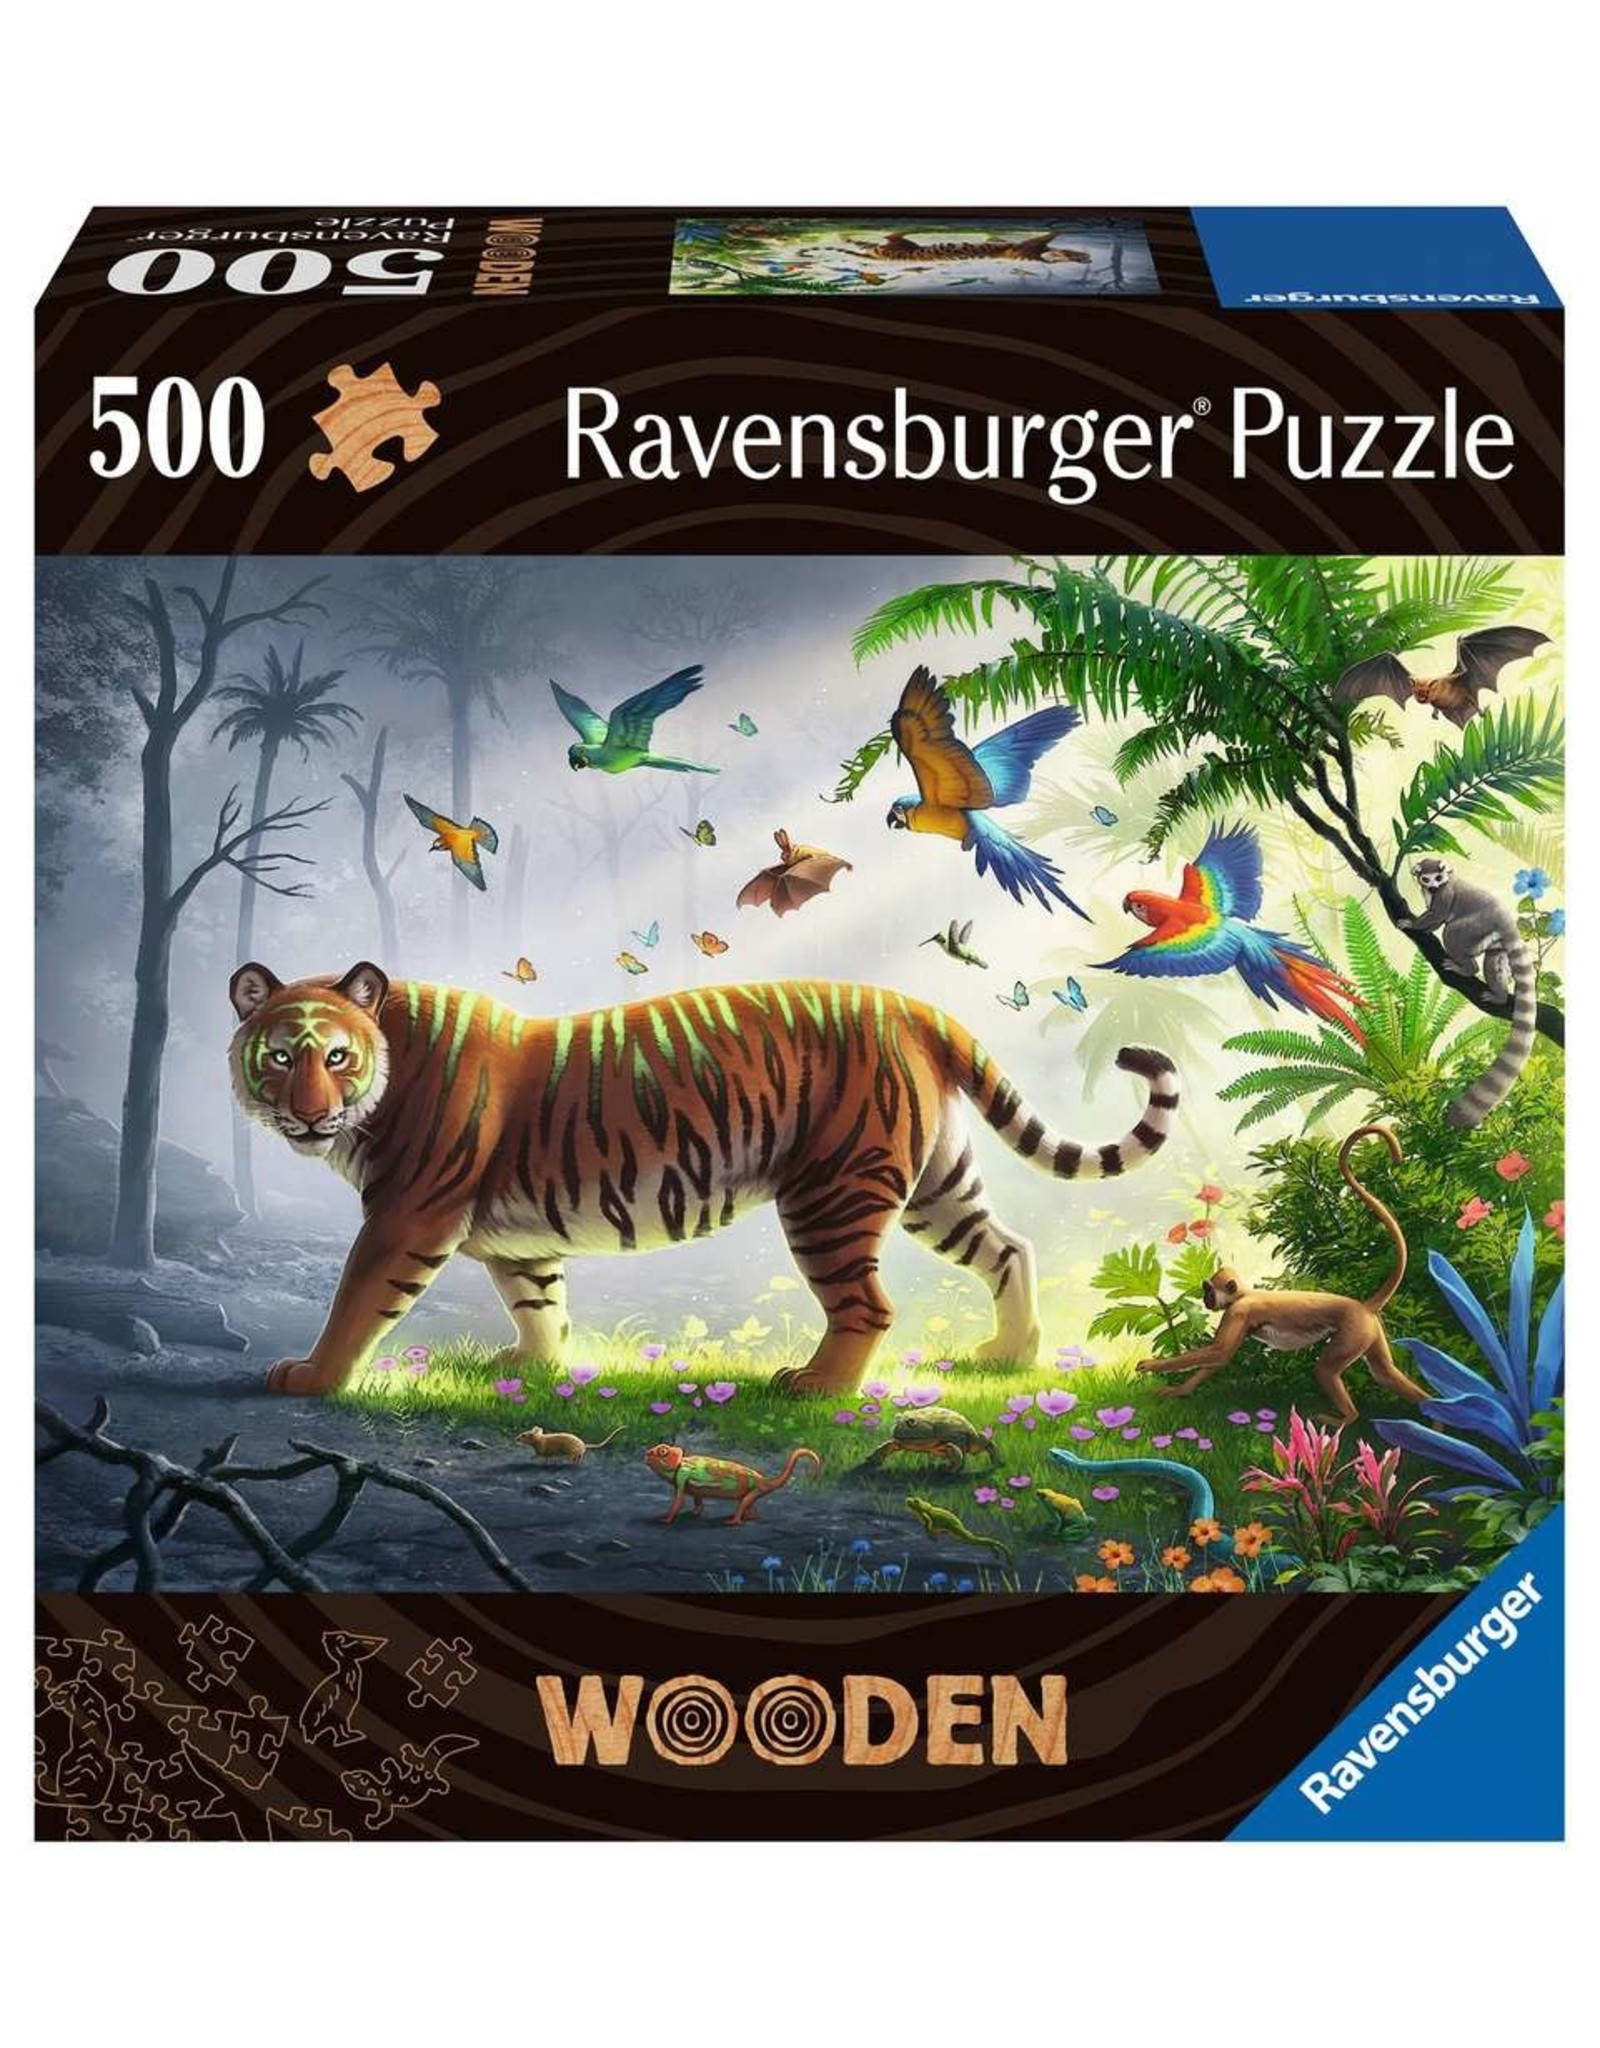 Ravensburger Wooden Tiger 500pc